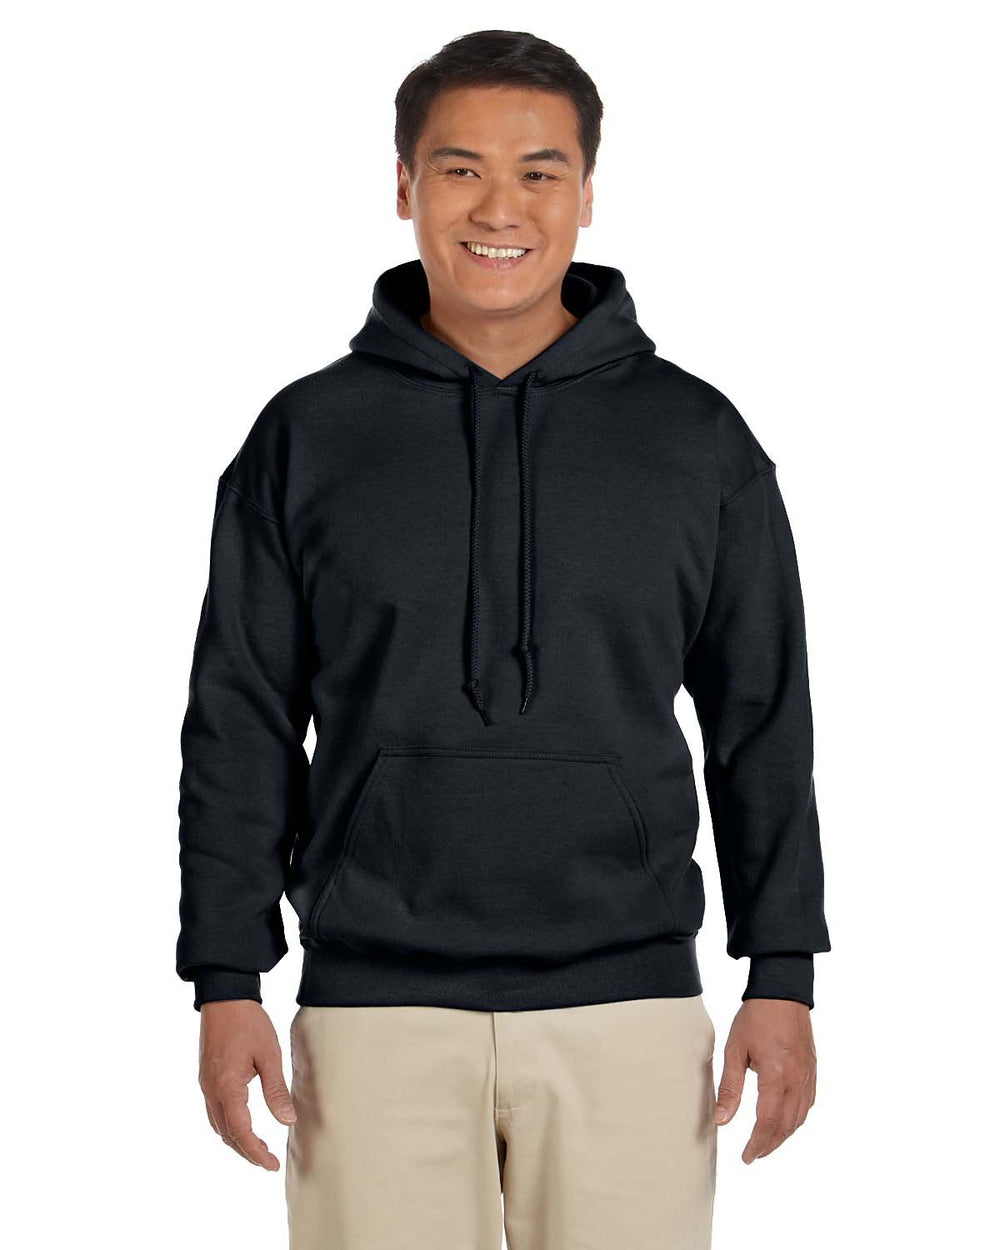 Hanes P170 Ecosmart 50/50 Hoodie Sweatshirt, Wholesale